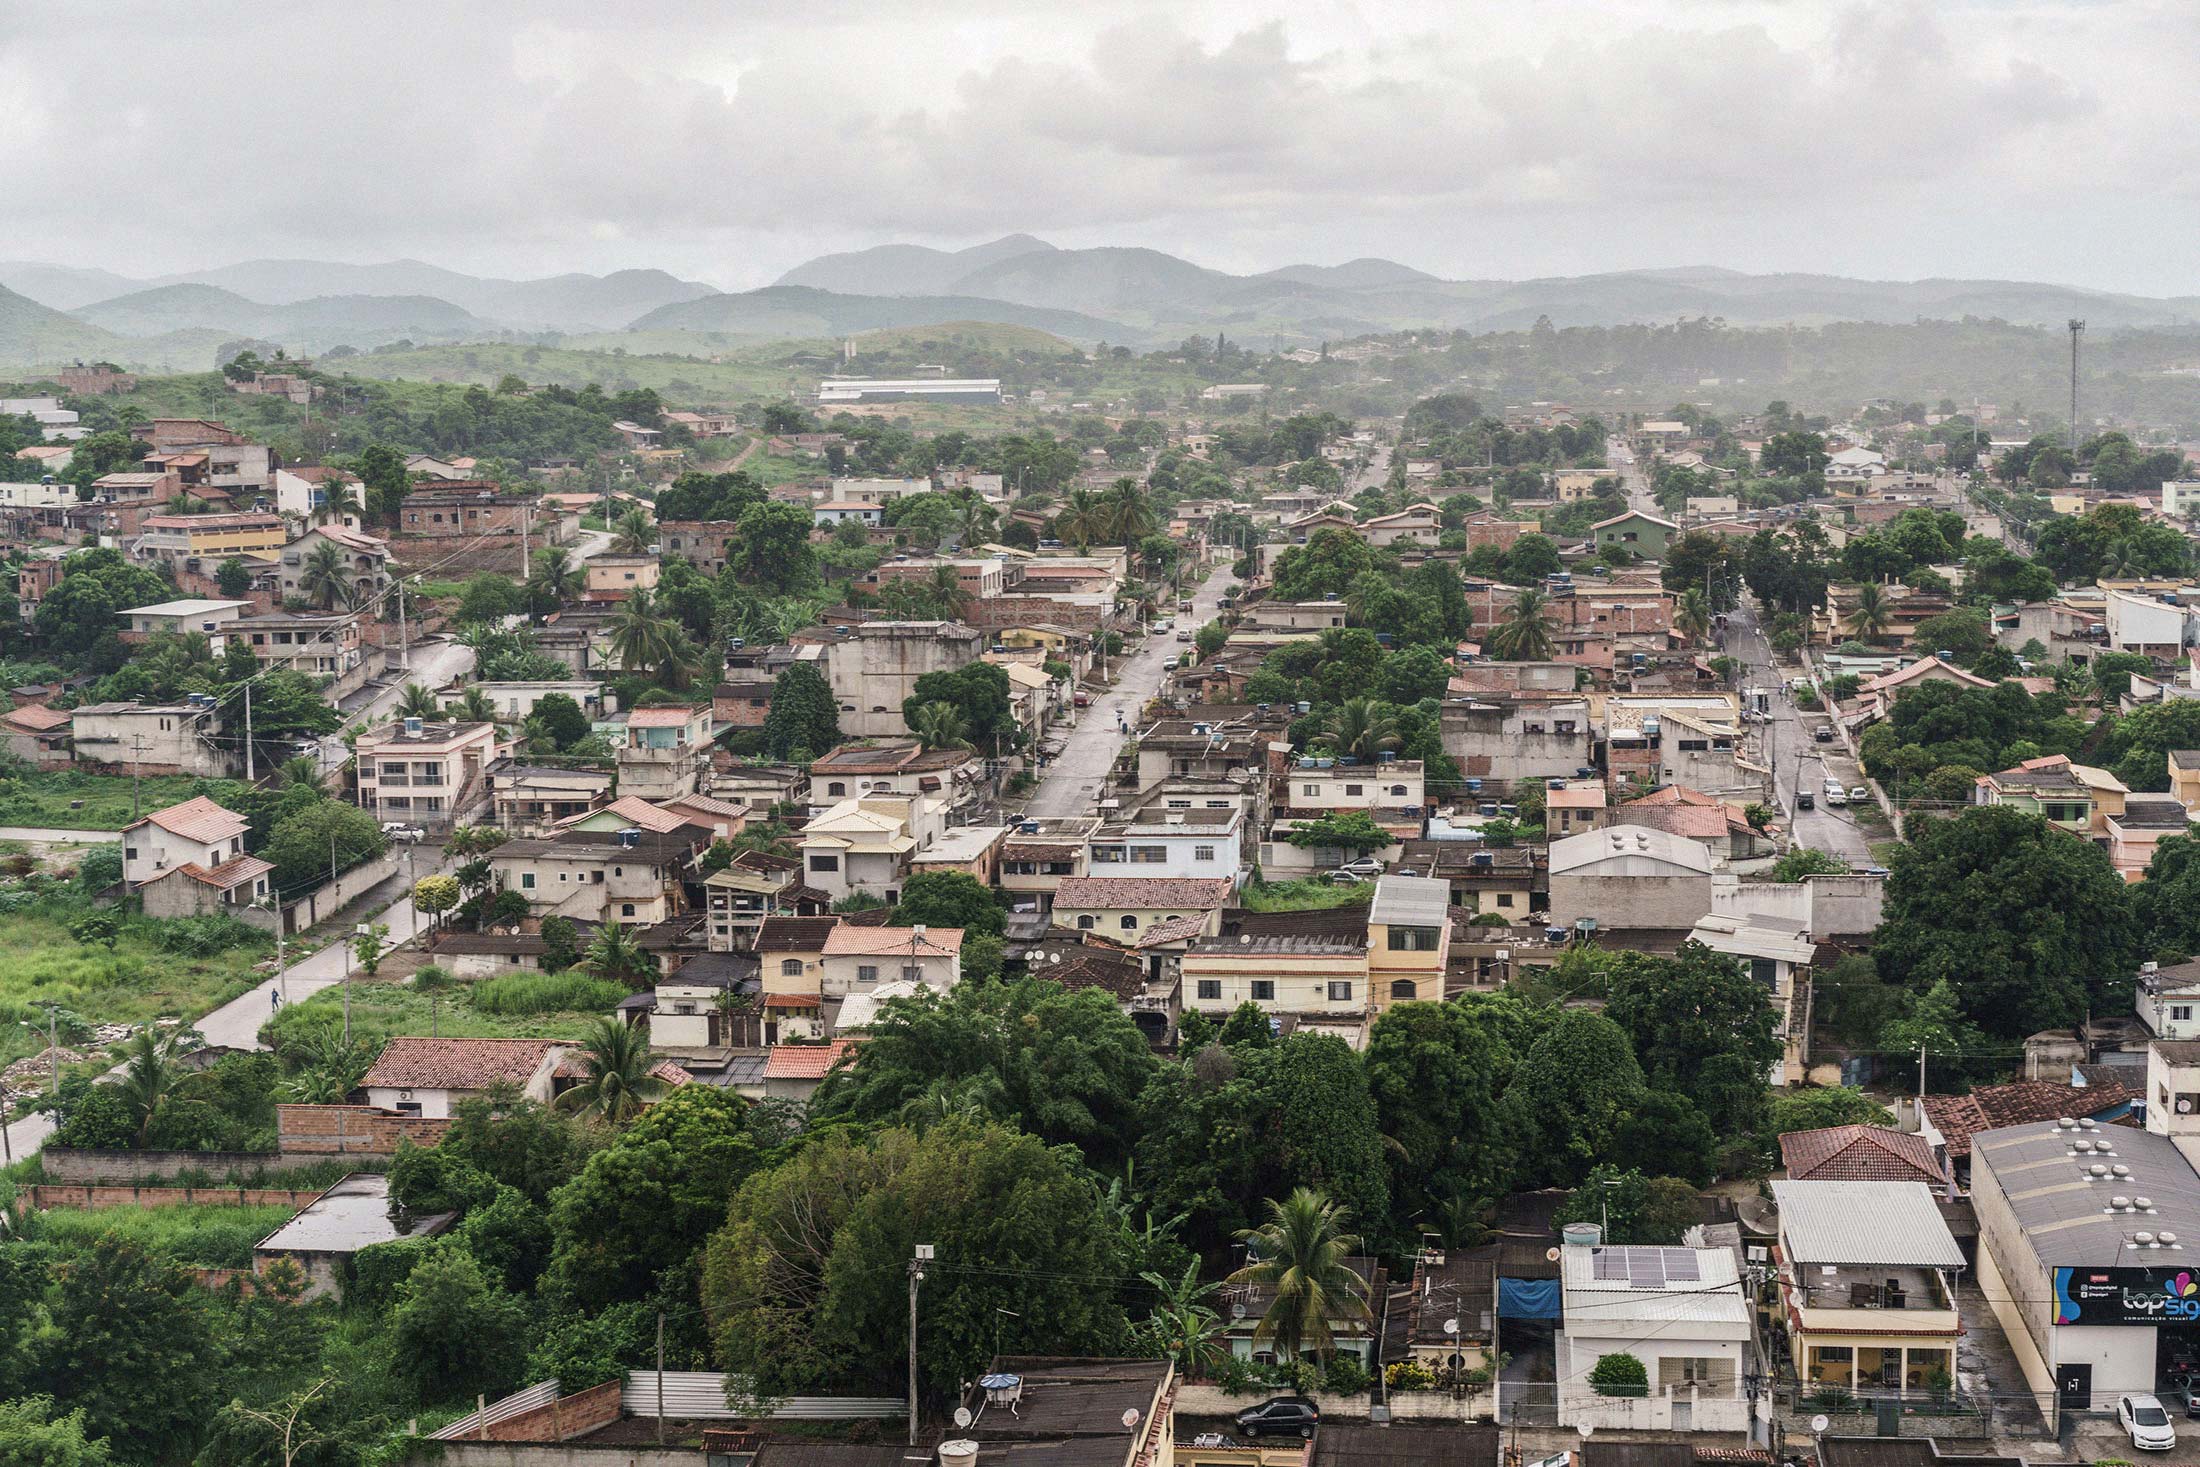 The town of Itaboraí on the outskirts of Rio de Janeiro.